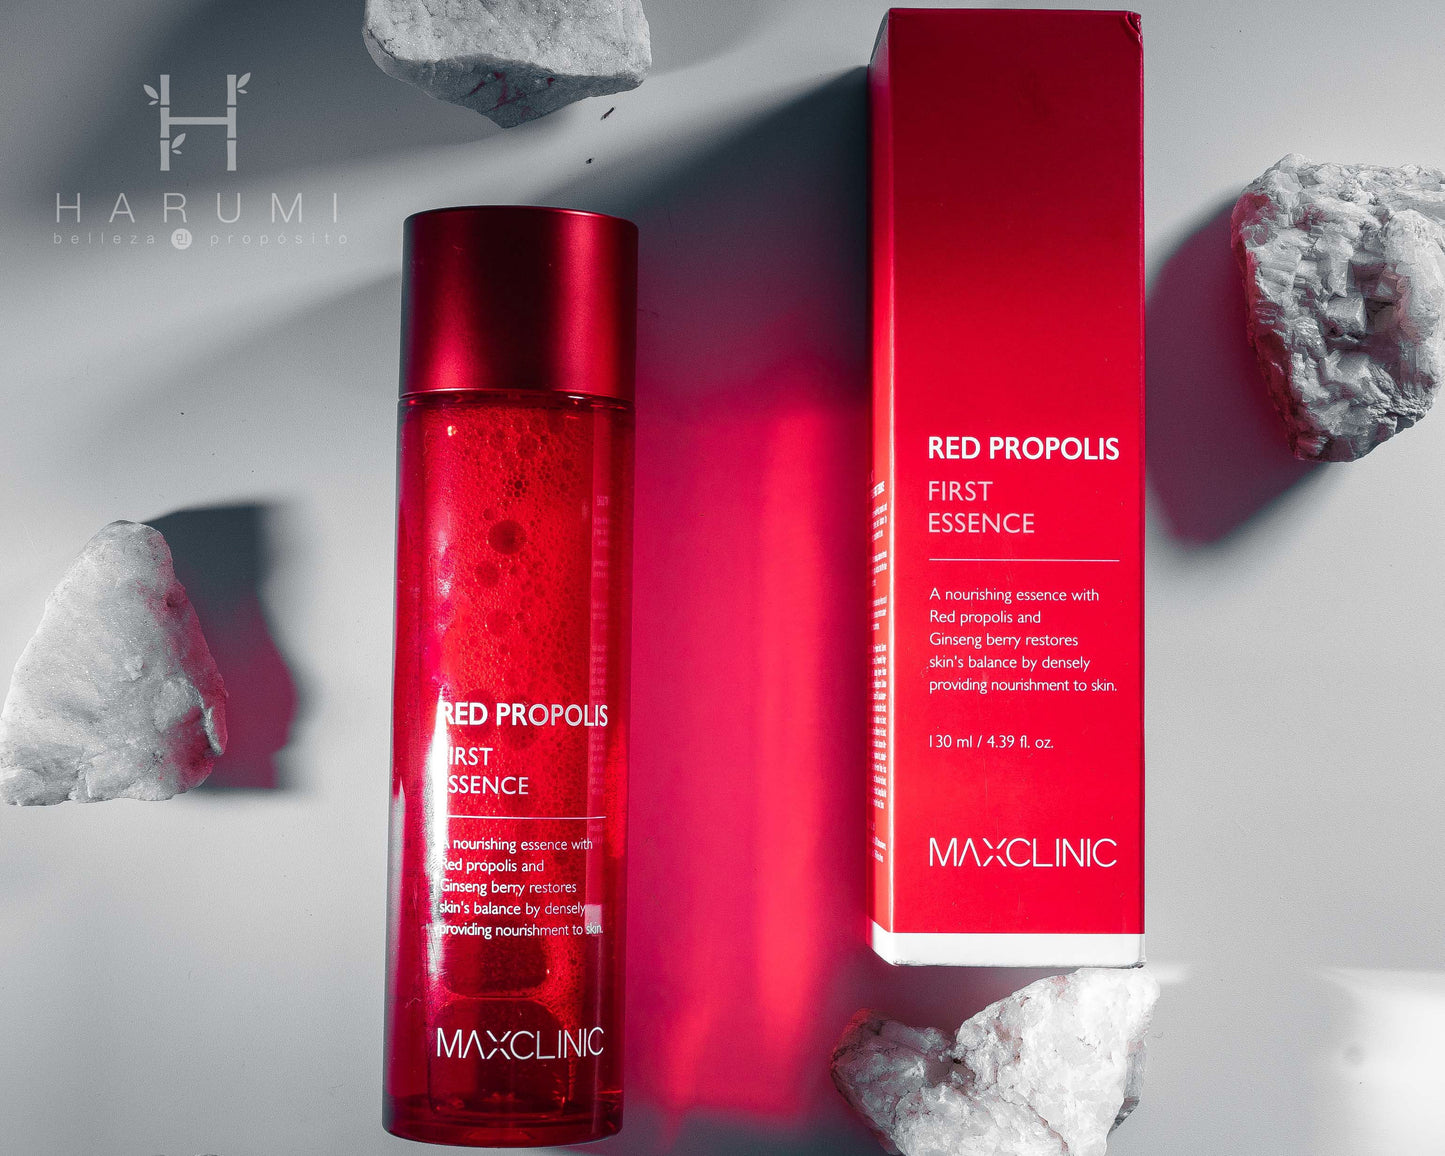 Maxclinic Red Propolis Collagen Essence & Toner Skincare maquillaje productos de belleza coreanos en Colombia kbeauty